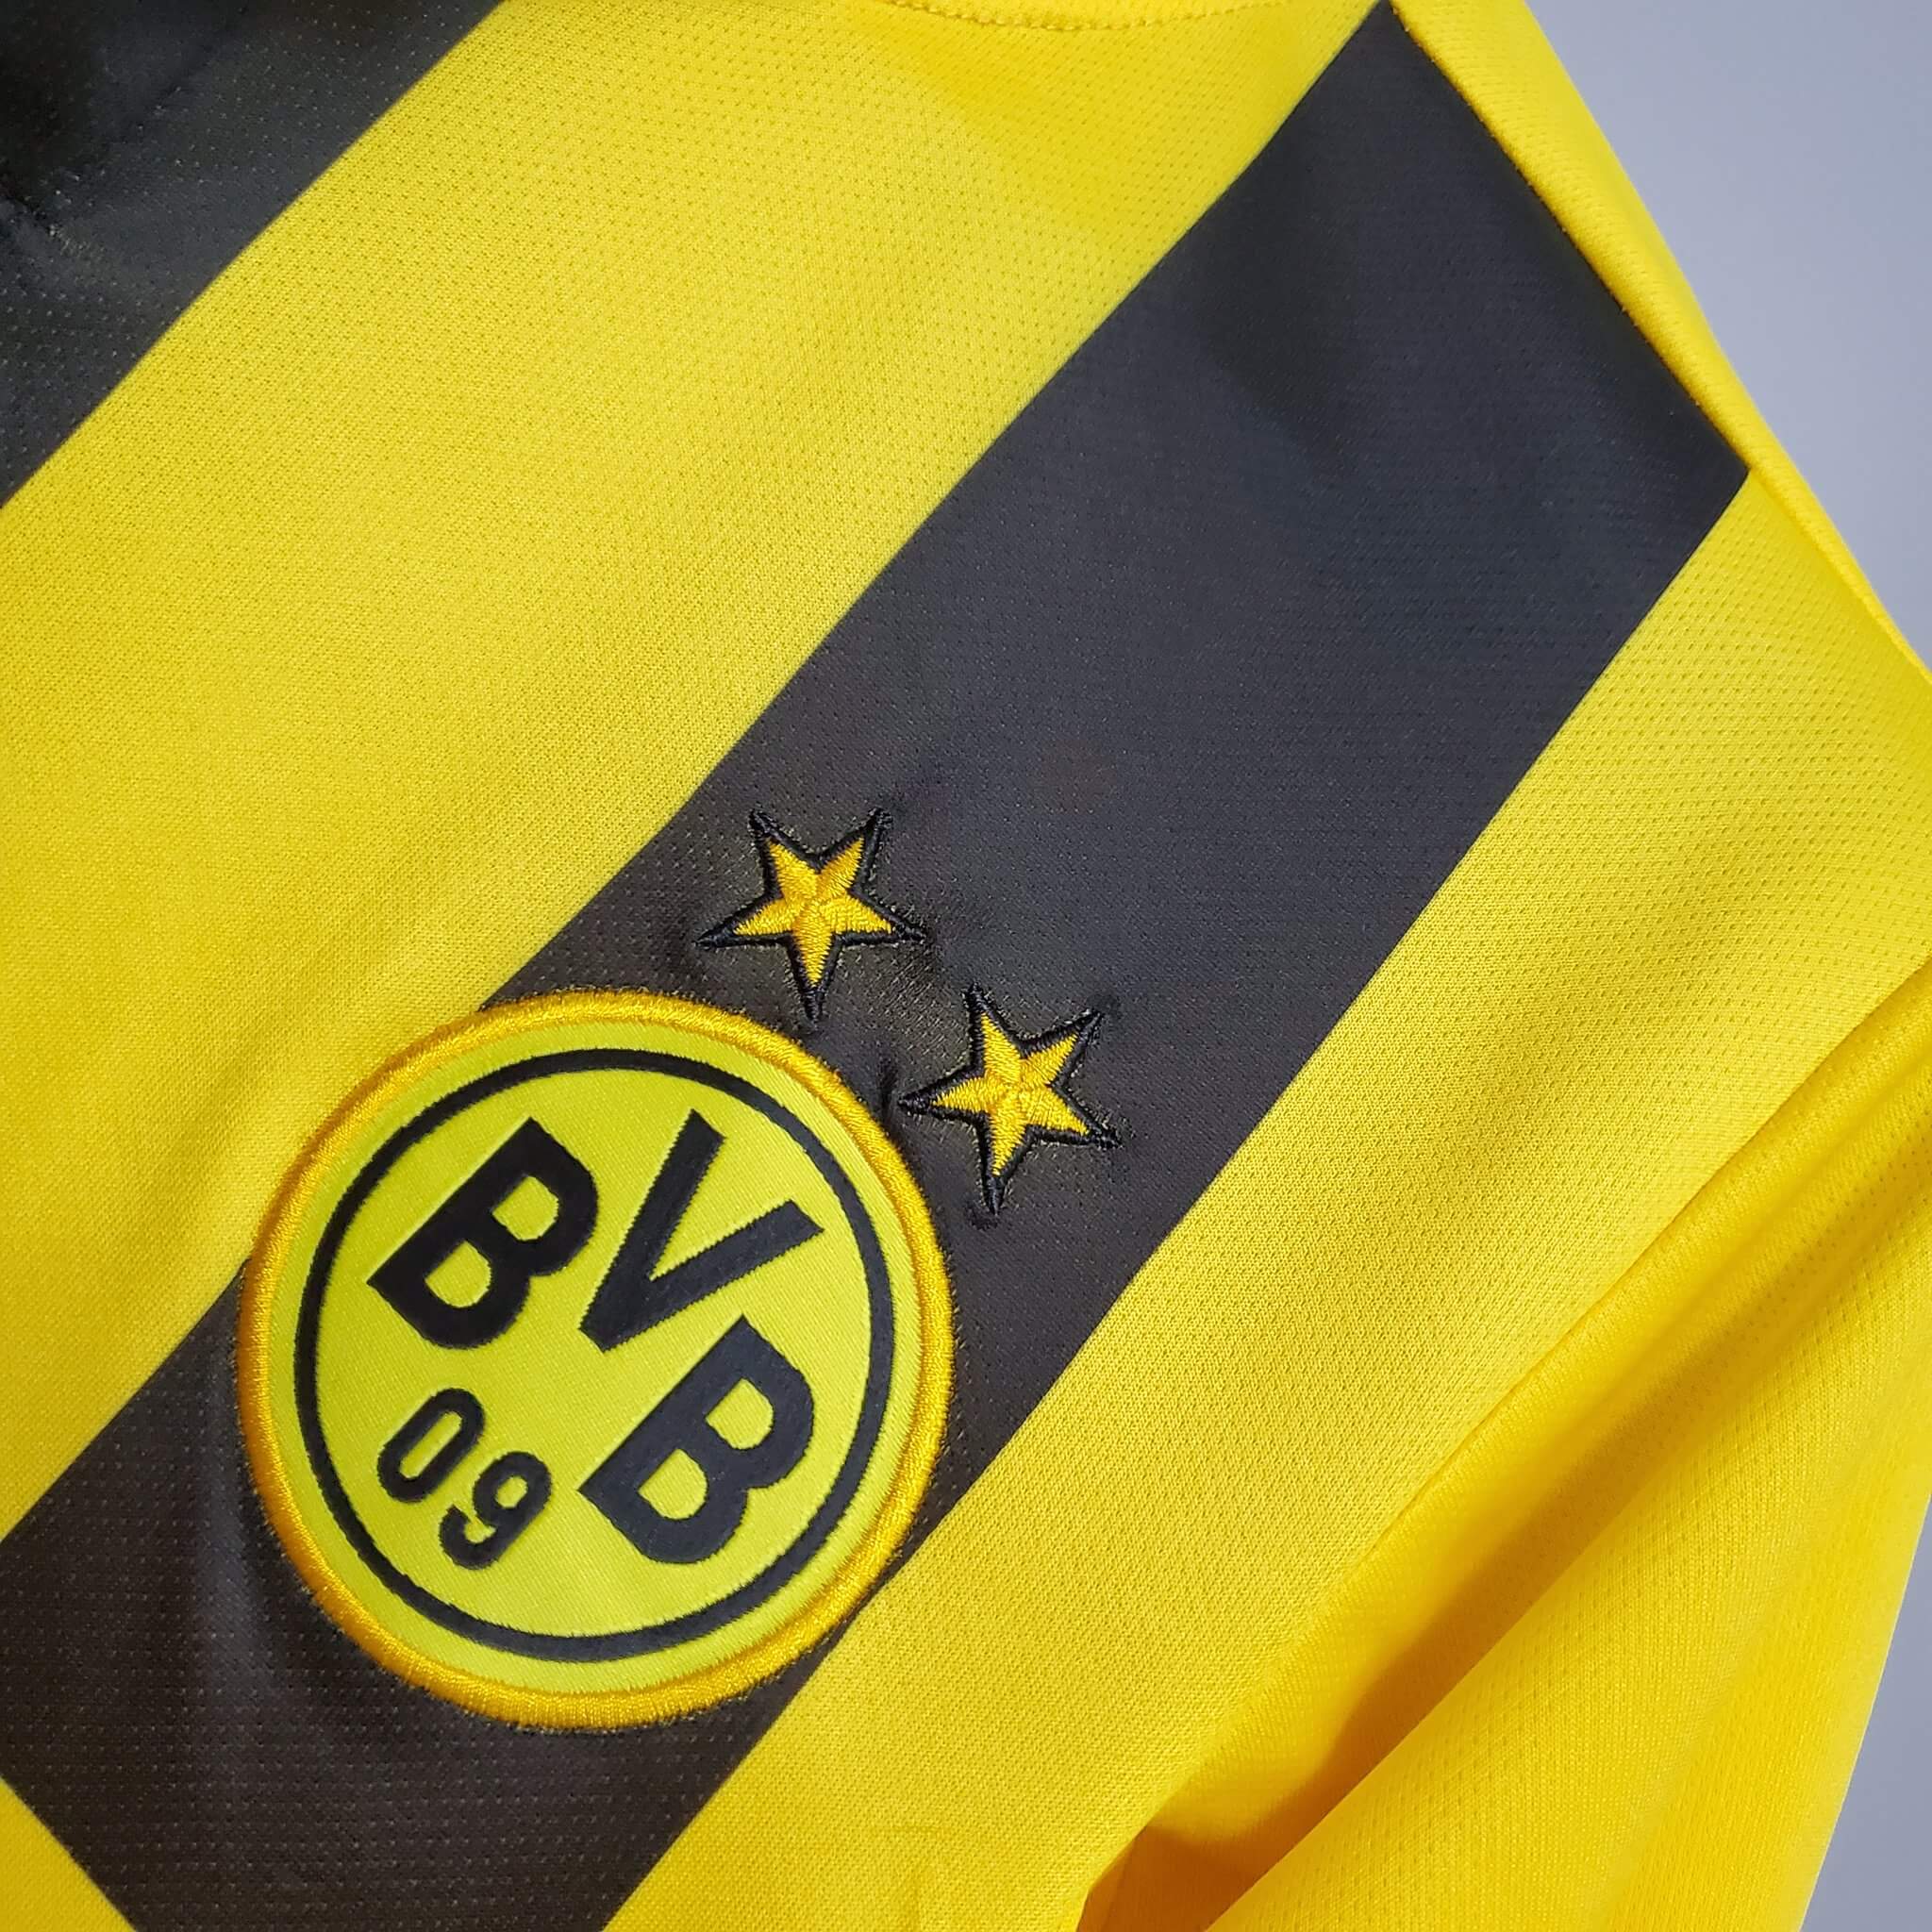 BVB  09 Borussia Dortmund Trikot Pin 2012/2013 Home Badge Kit Evonic 